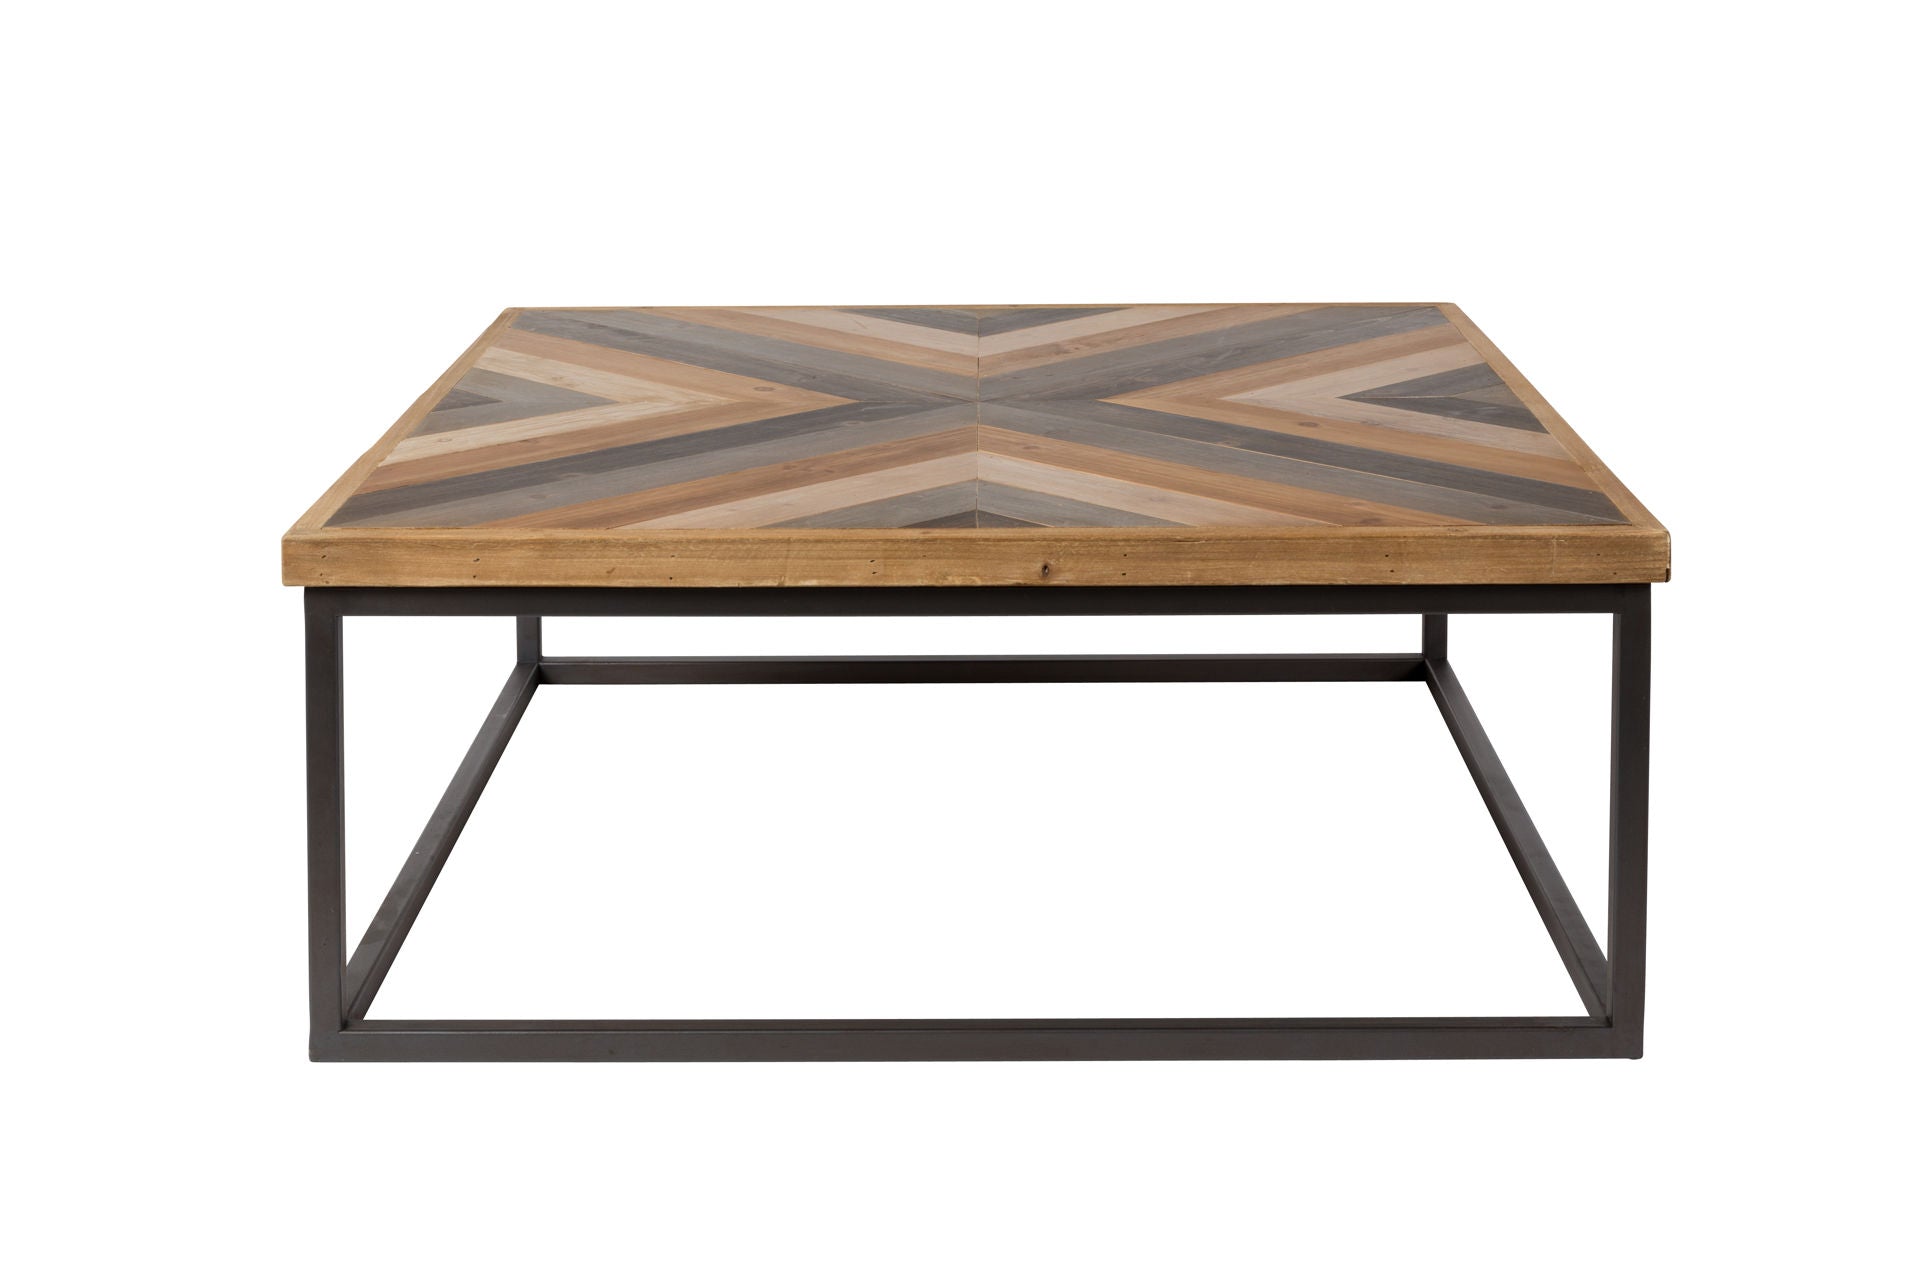 Nancy's Leeds Table - Modern - Multicolored - Wood, Mdf, Iron - 81 cm x 81 cm x 32 cm